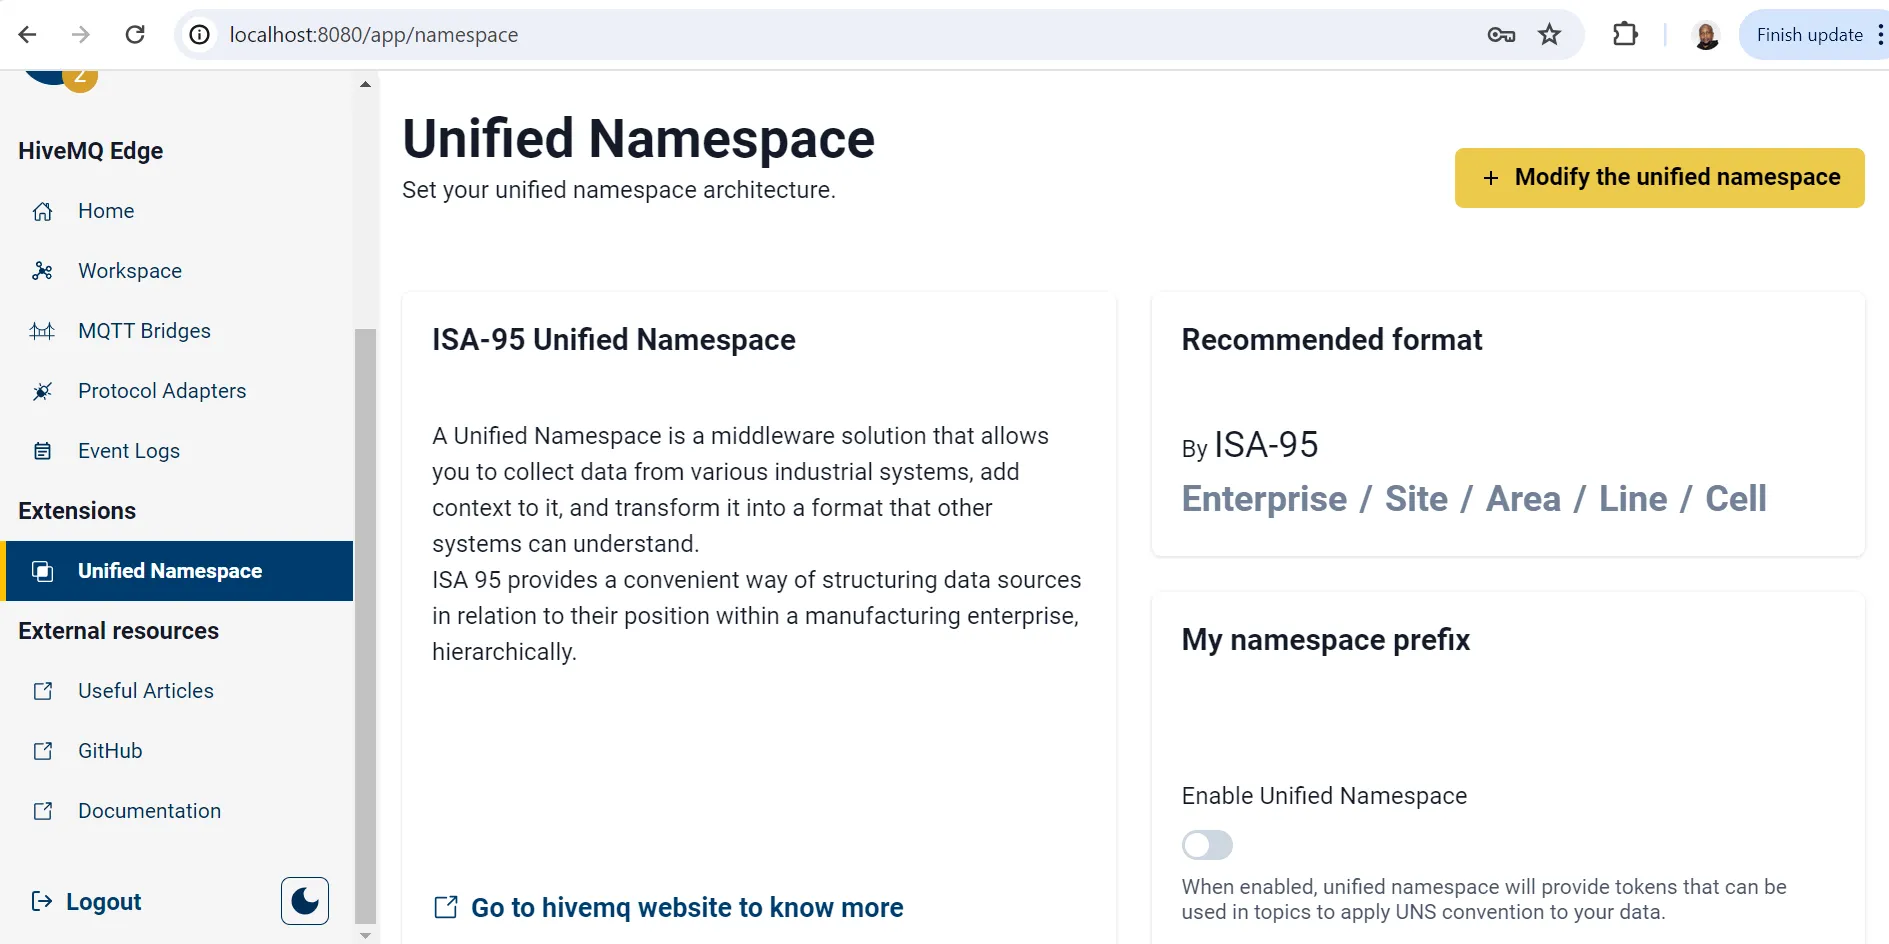 ISA-95 Unified Namespace on HiveMQ Edge